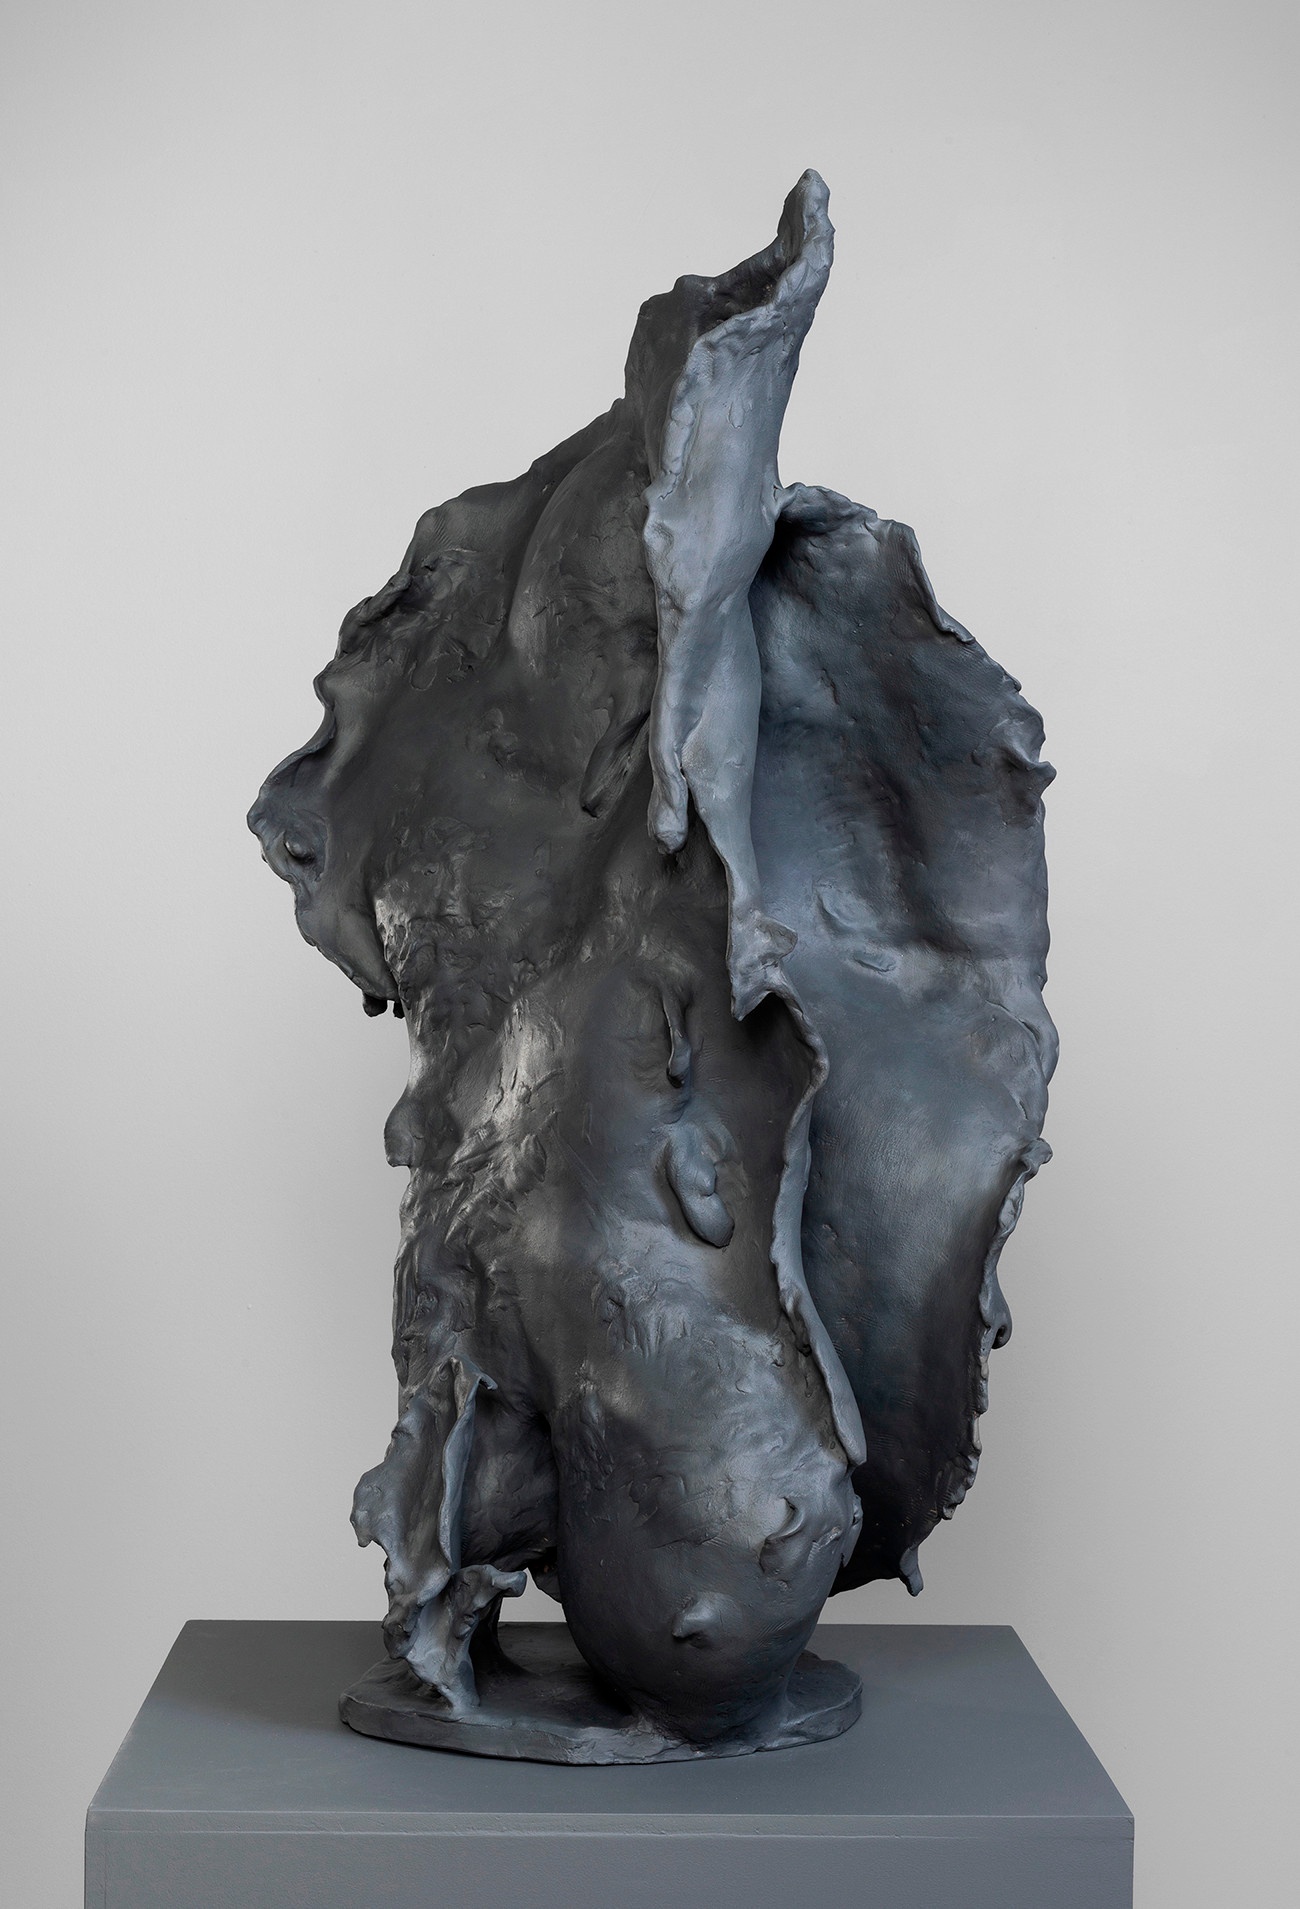 A dark, vaguely amorphous sculpture on a dark gray platform.